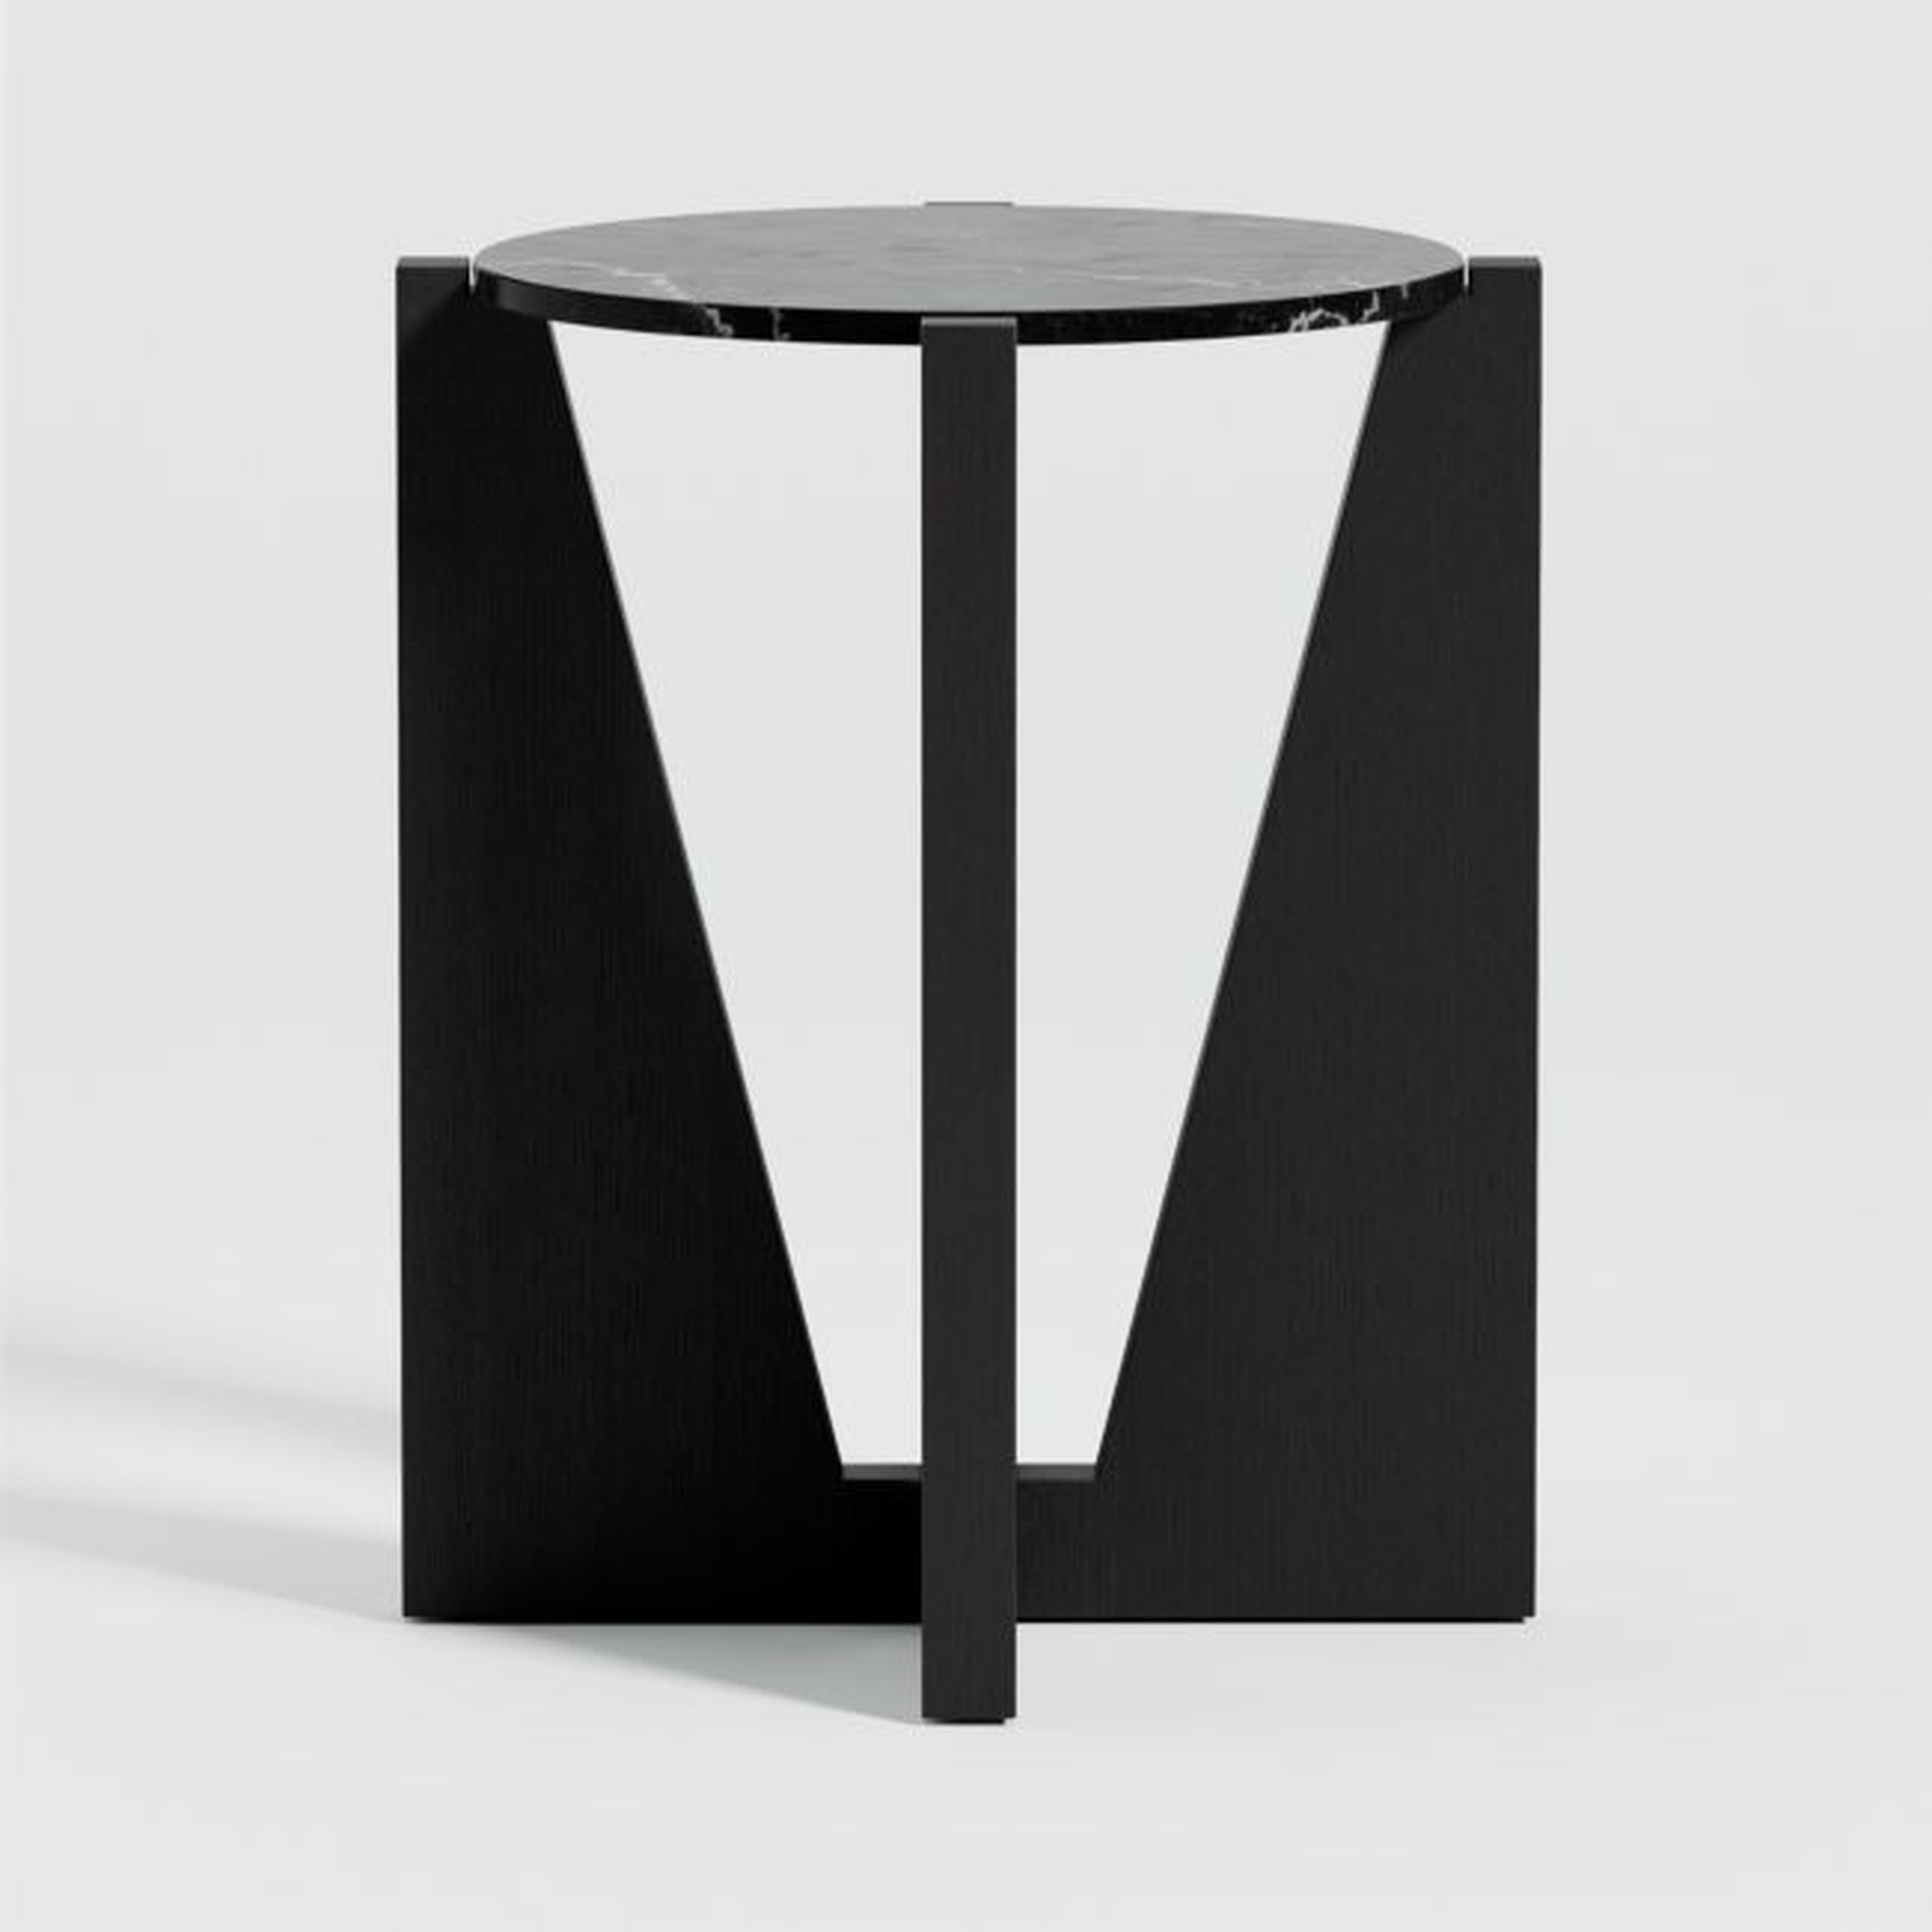 Miro Black Marble Round End Table with Black Ebonized White Oak Wood Base - Crate and Barrel